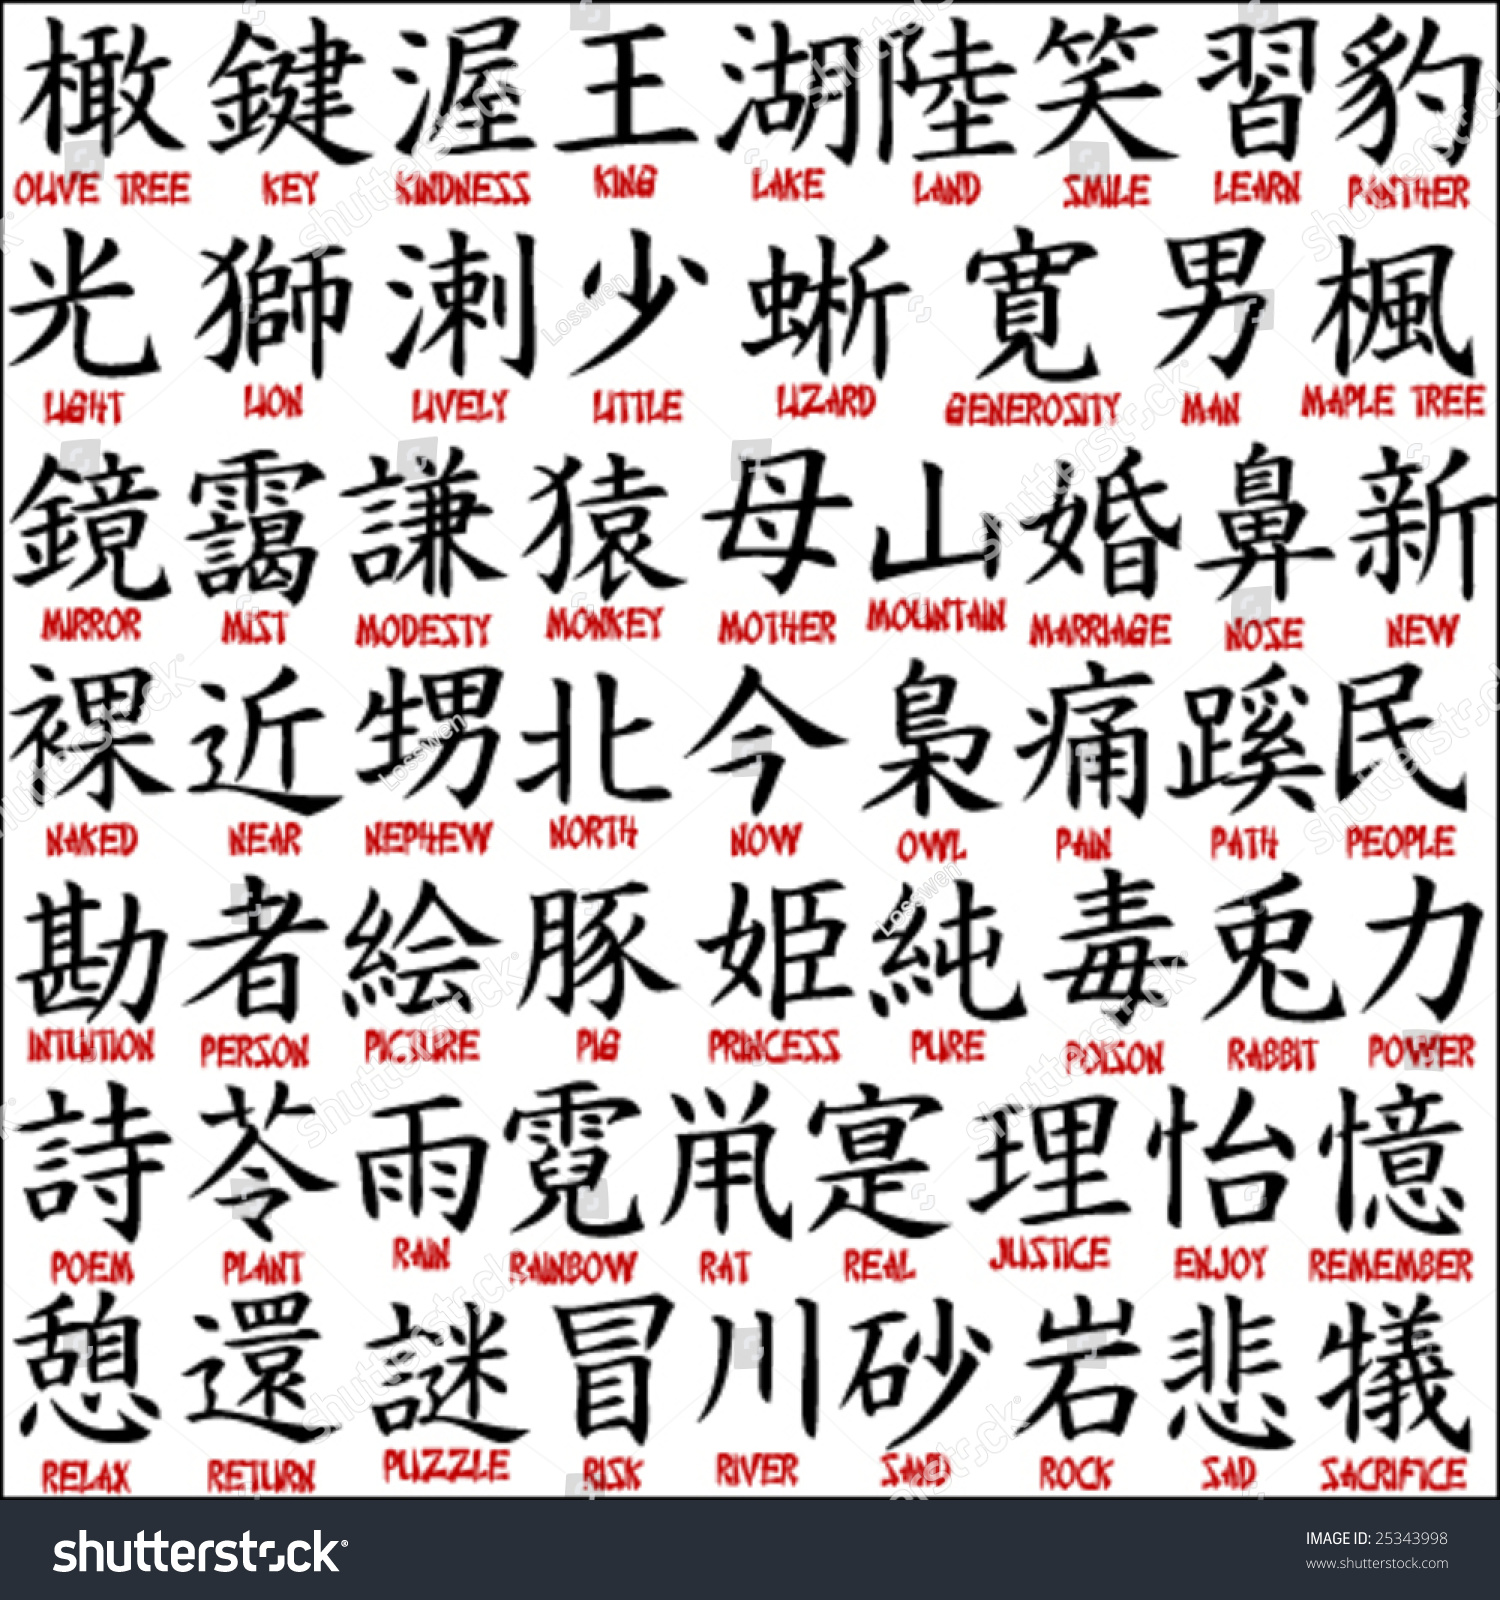 Japanisches Kanji - chinesische Symbole 7: Stock-Vektorgrafik (Lizenzfrei) ...